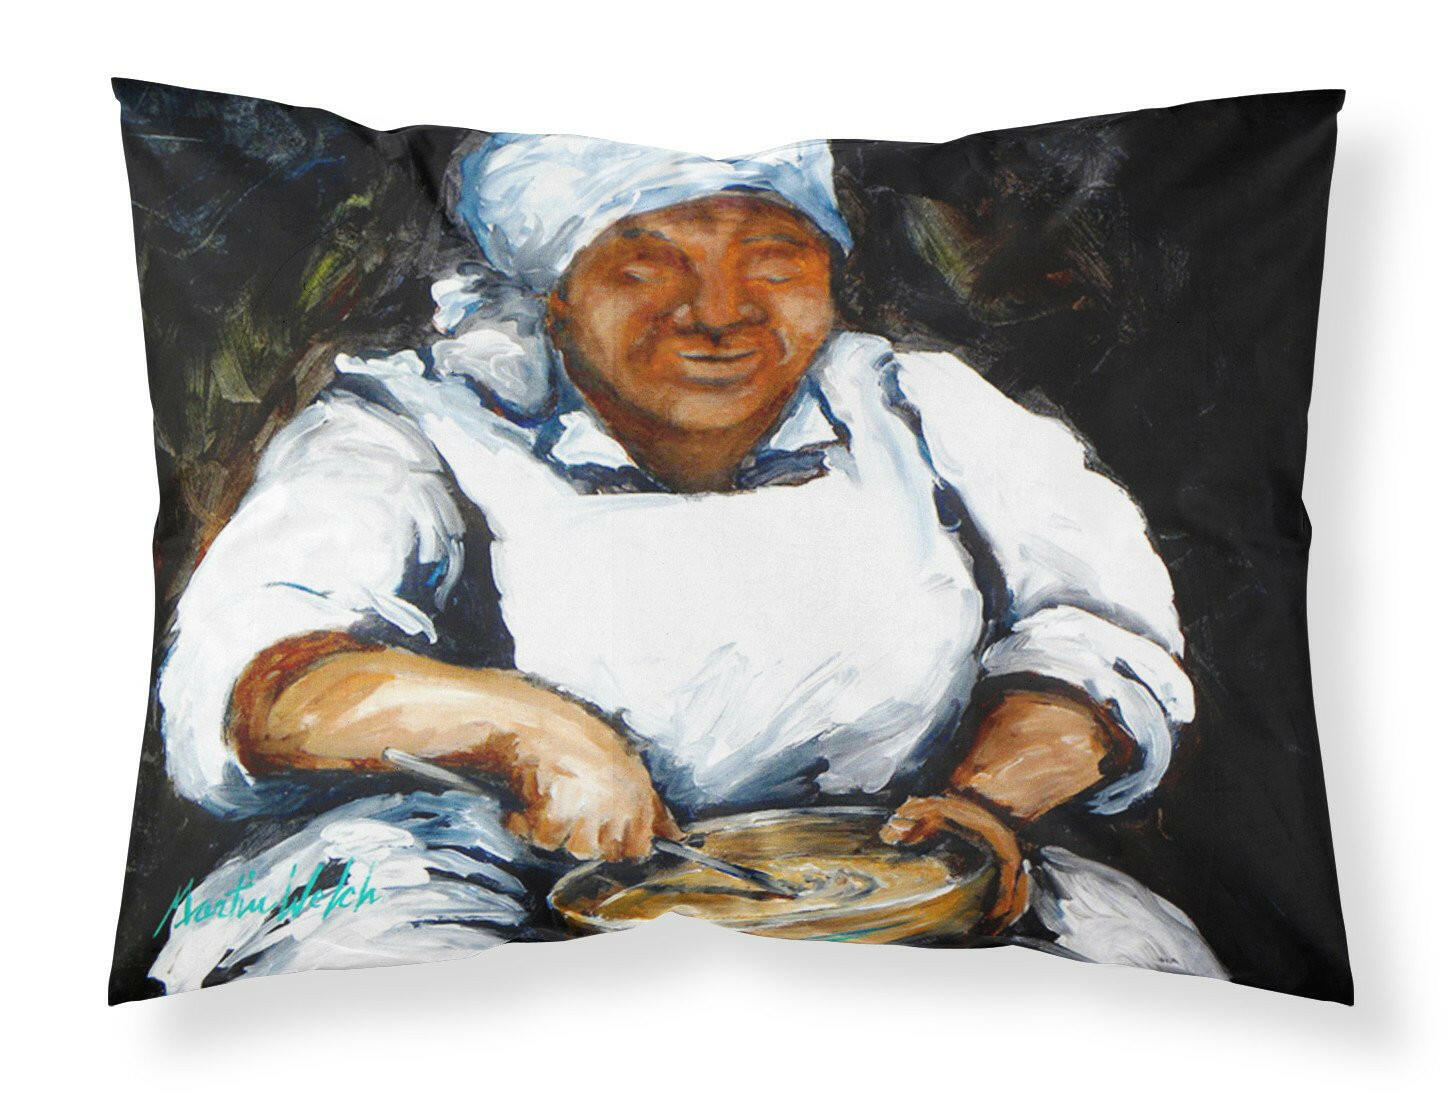 Hot Water Cornbread Moisture wicking Fabric standard pillowcase by Caroline's Treasures